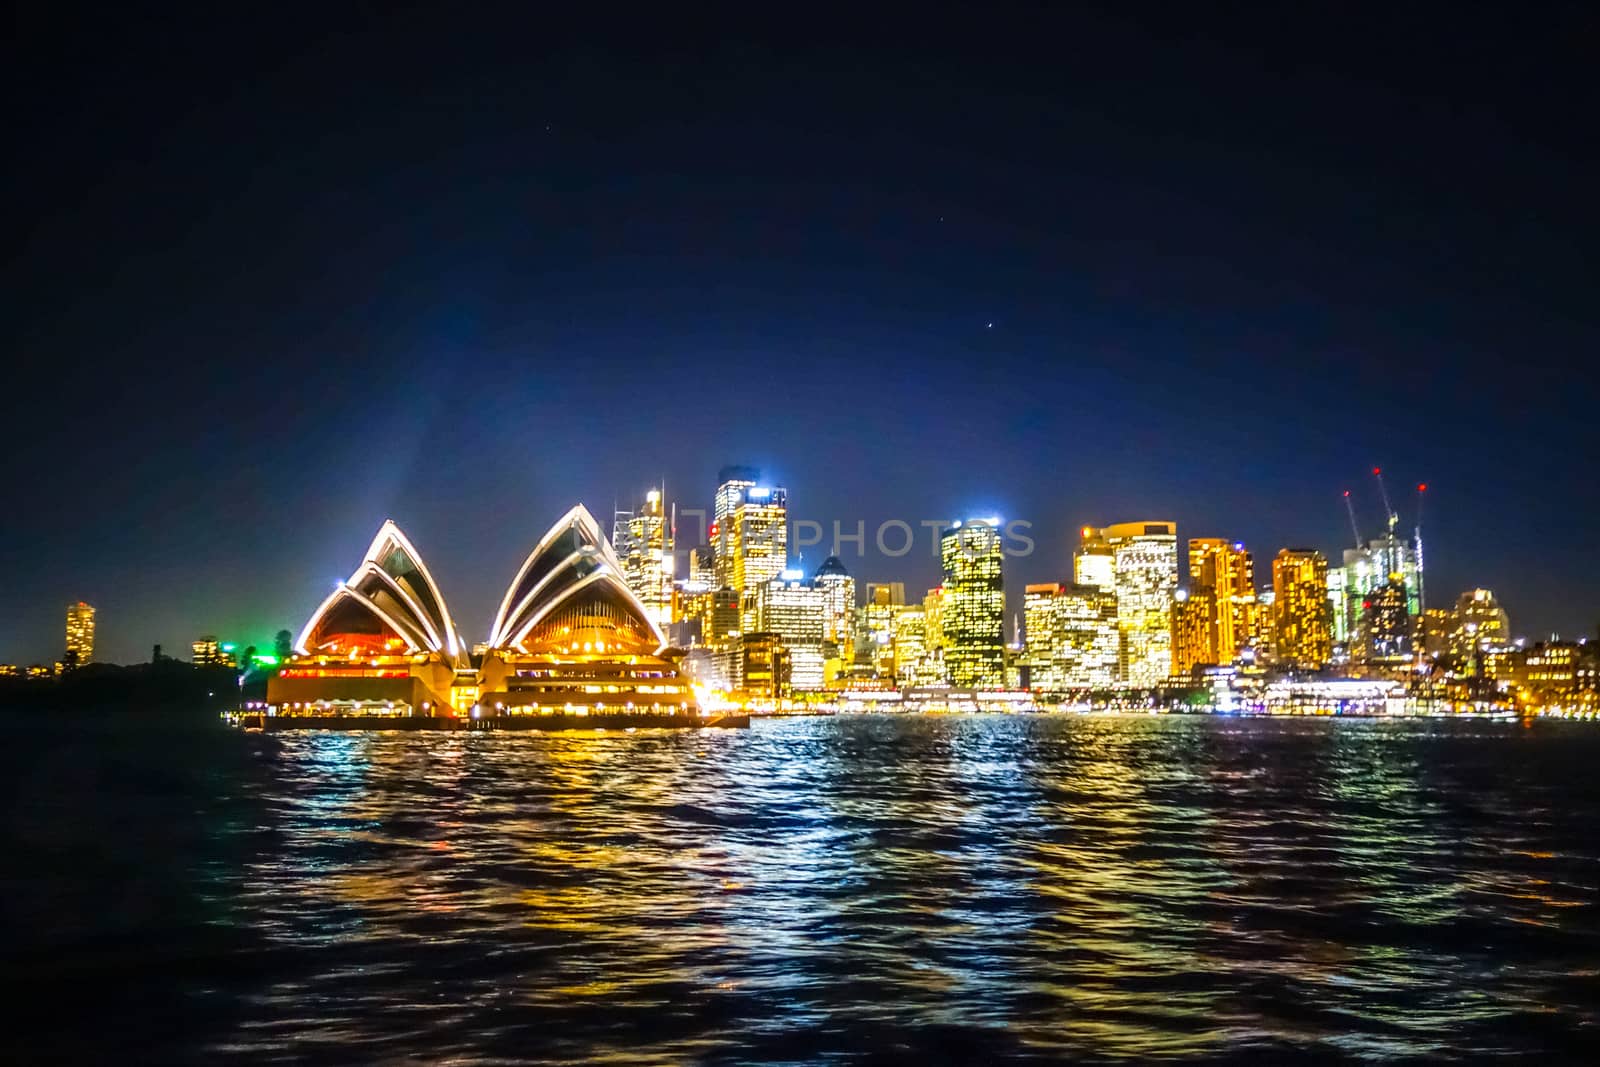 Sydney at night, Australia by daboost